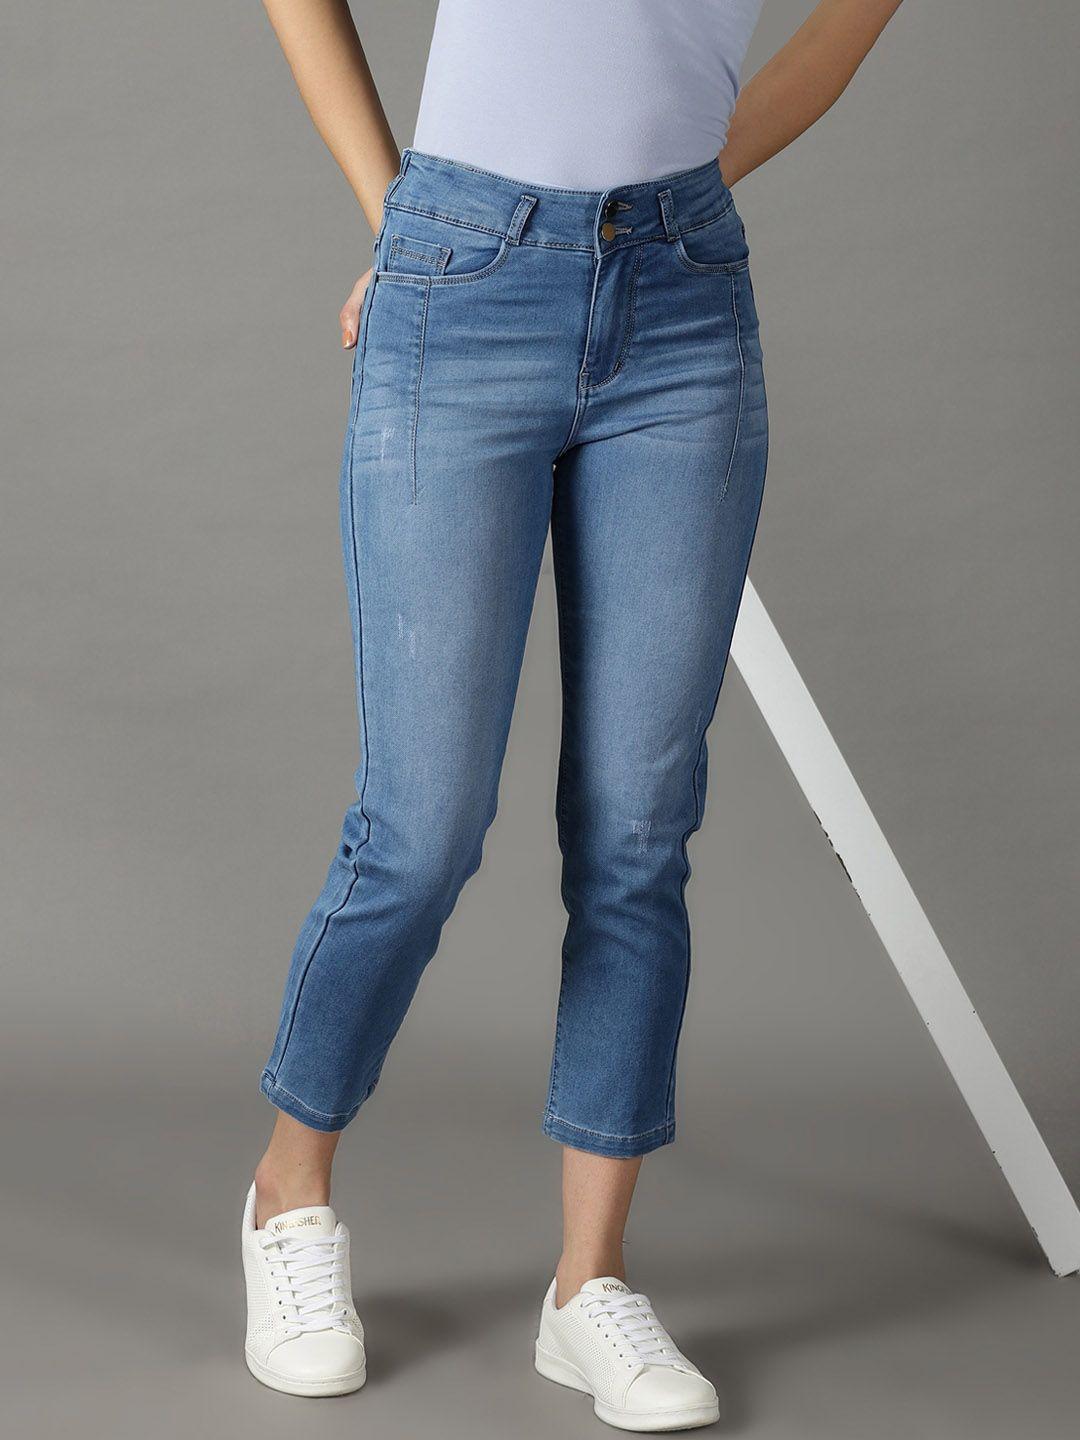 showoff-women-slim-fit-low-distress-light-fade-acid-wash-stretchable-cotton-jeans